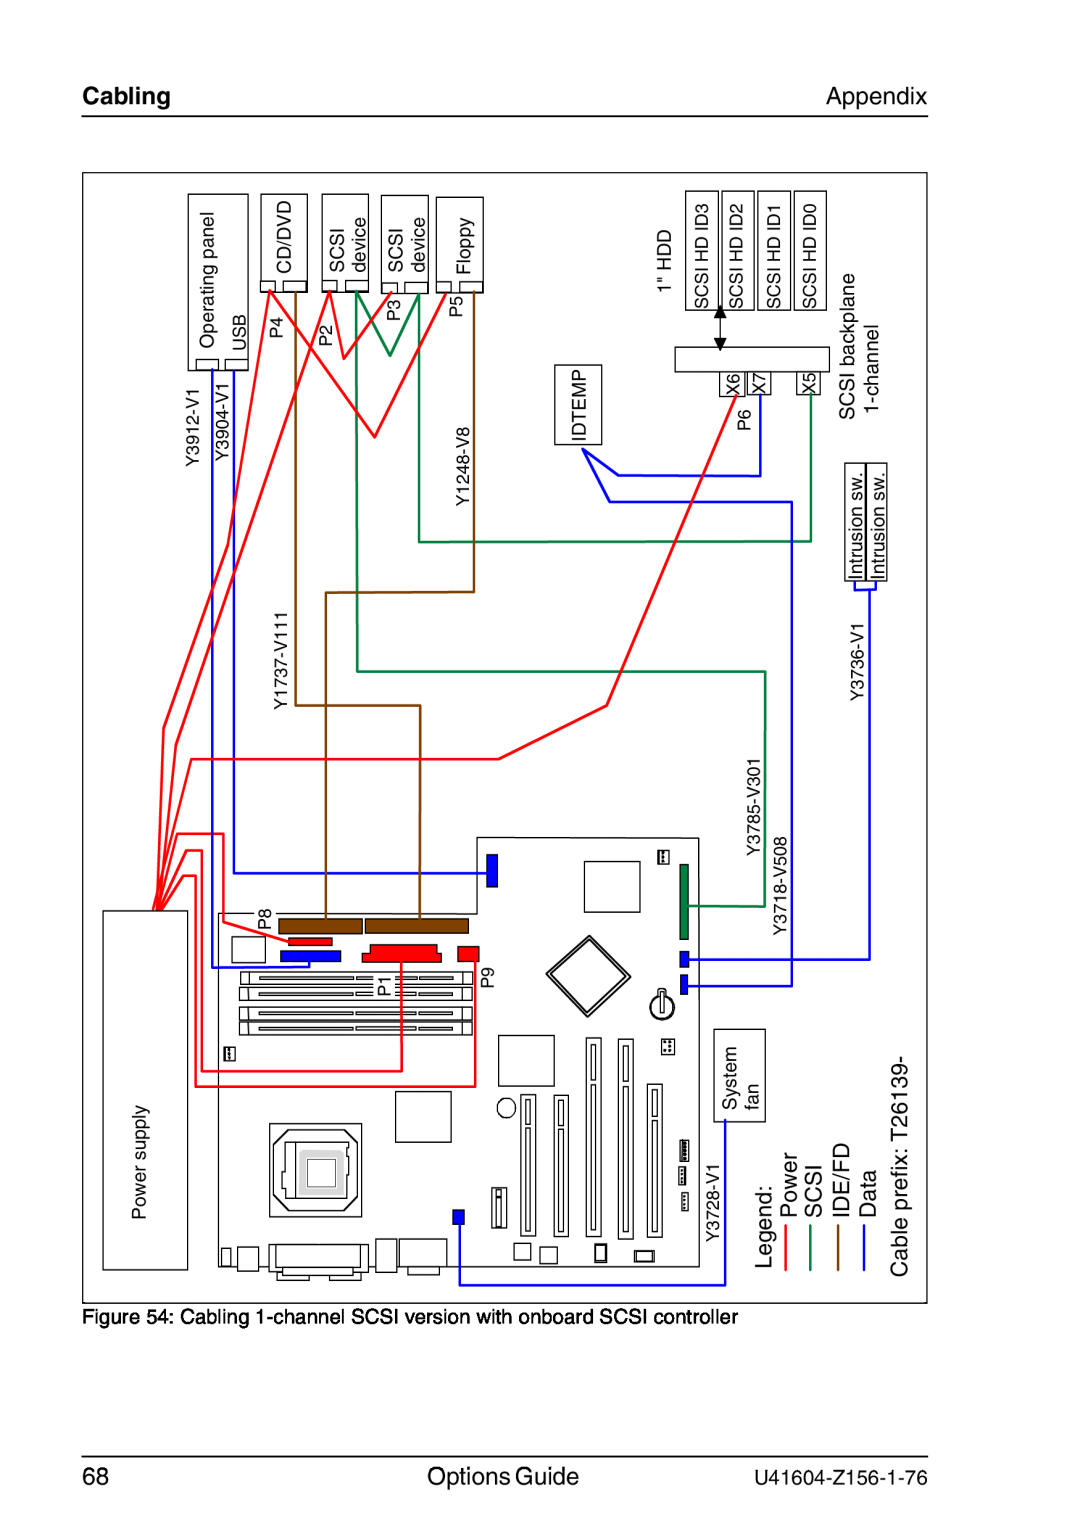 Fujitsu TX150 S3 Power, Scsi, Ide/Fd, Data, Cable prefix T26139, U41604-Z156-1-76, Cabling, onboard SCSI, SCSI backplane 